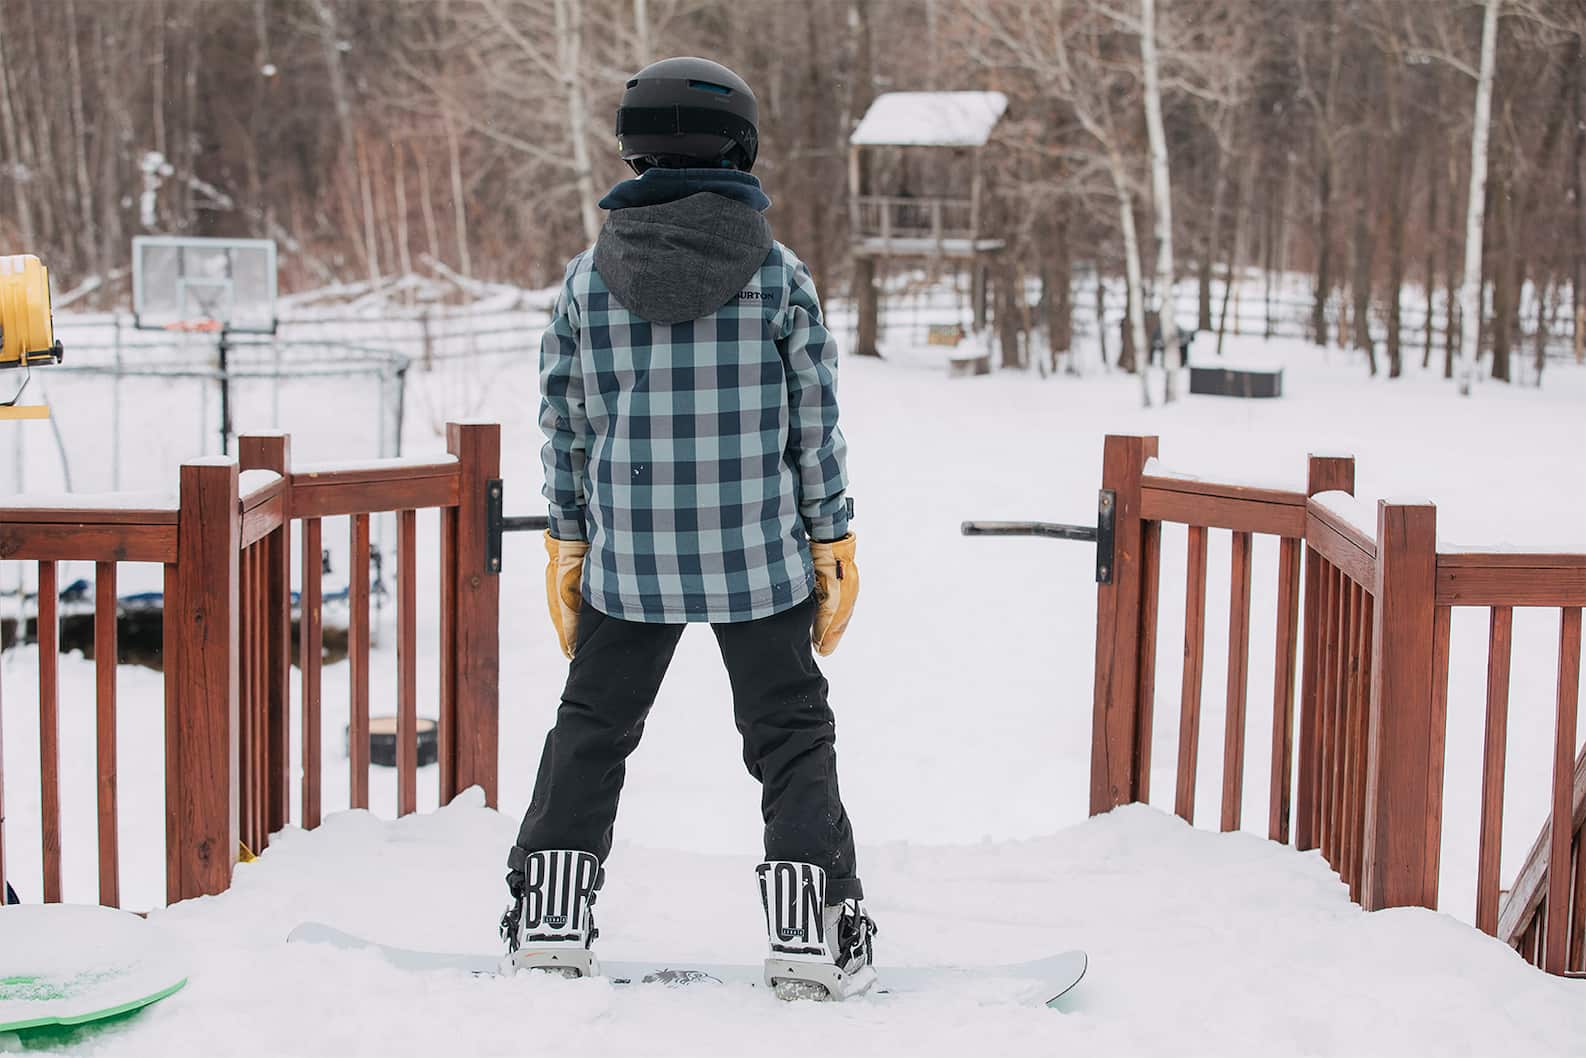 How to Build a Backyard Terrain Park for Snowboarding | Burton Snowboards